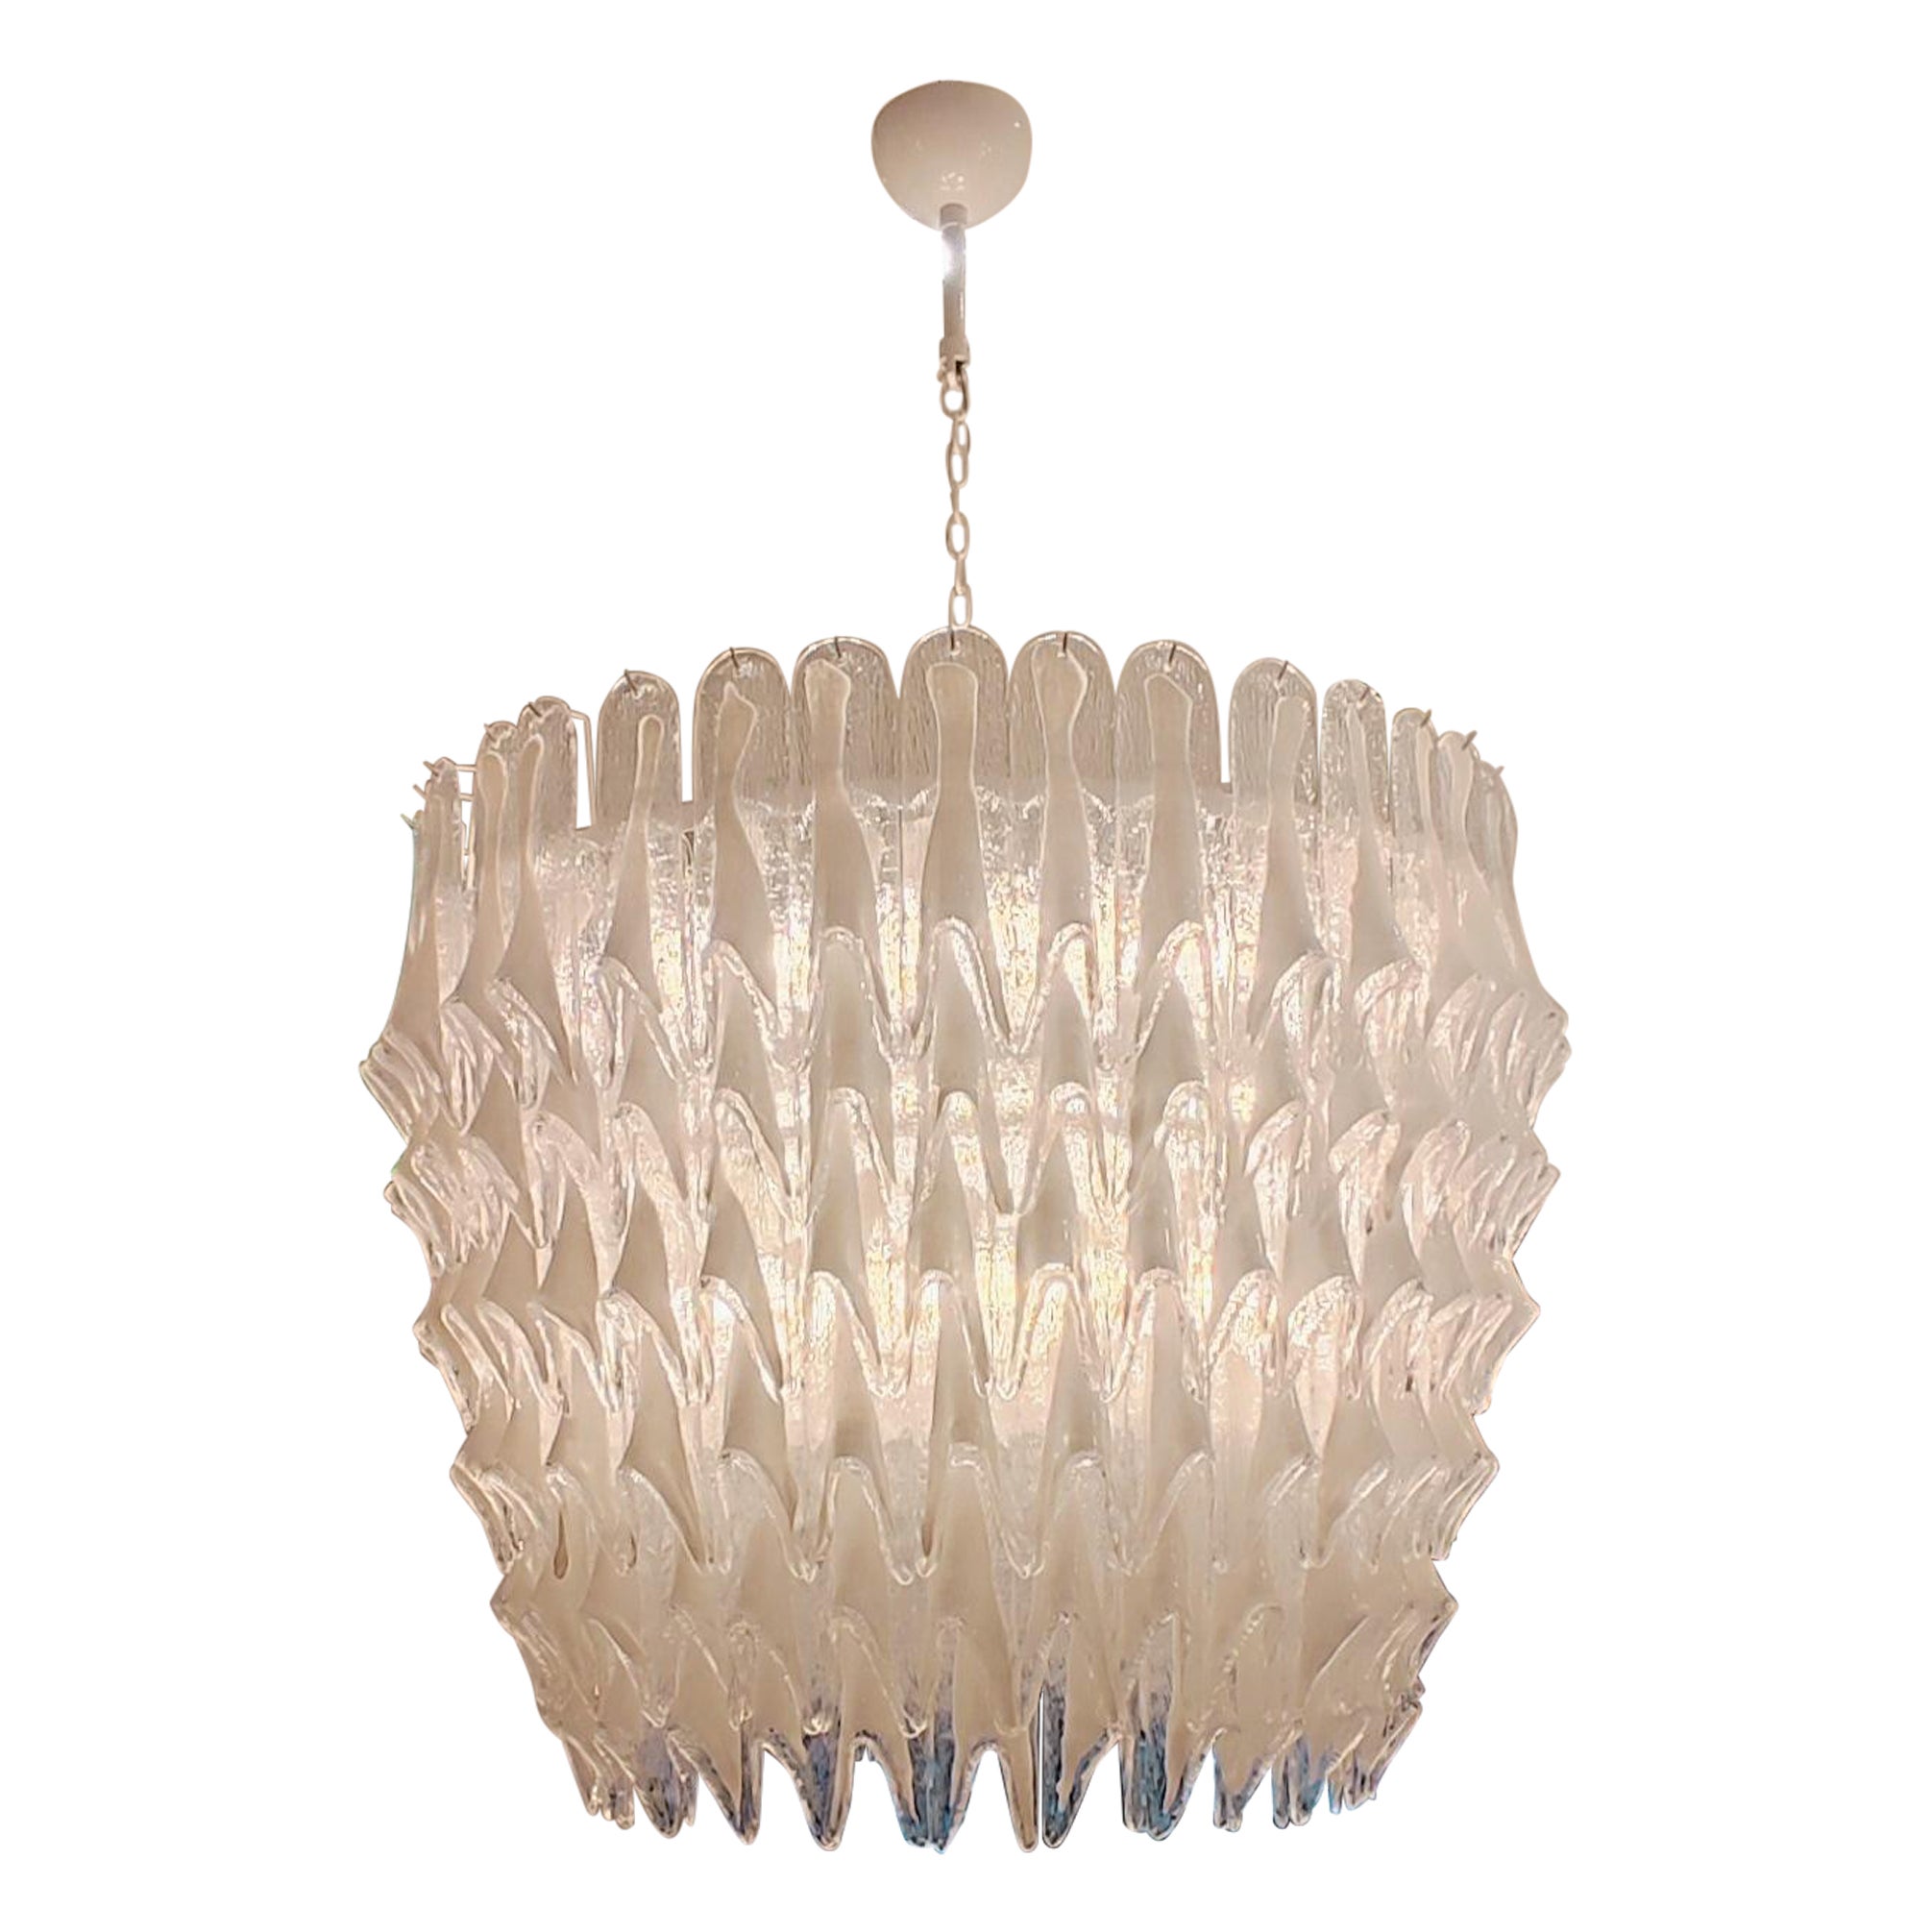 Huge Murano glass chandelier For Sale